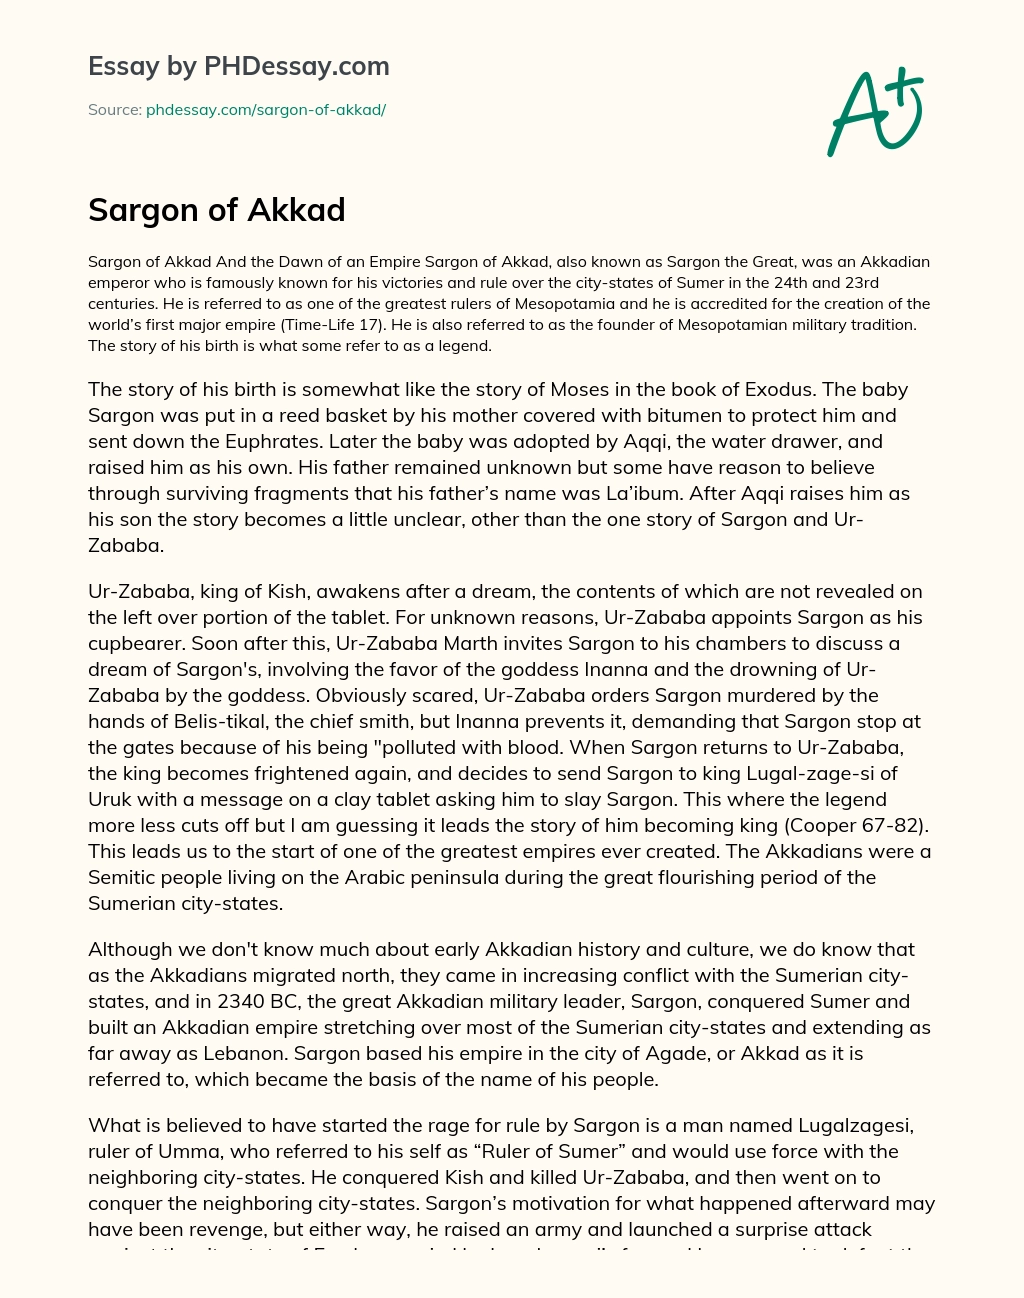 Sargon of Akkad essay